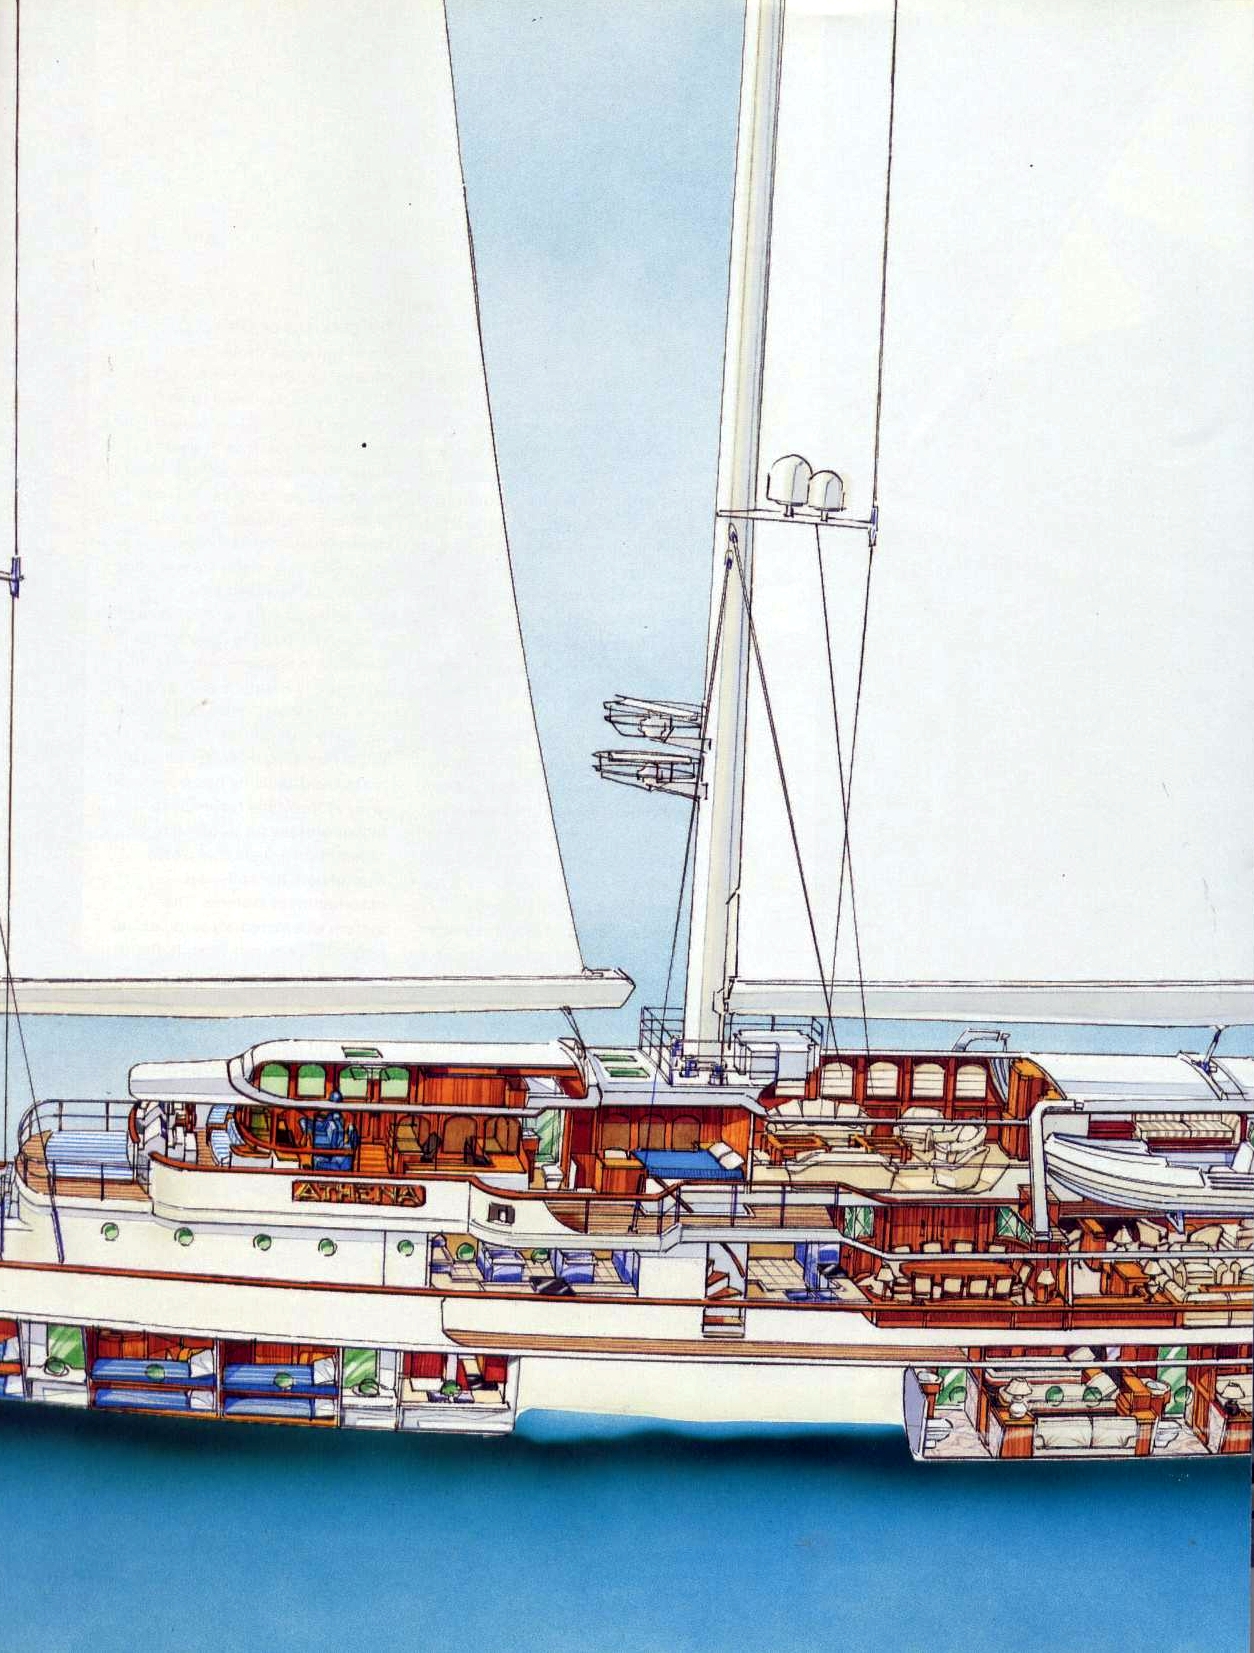 athena-superstar-yacht-capital-marzo-2005-1